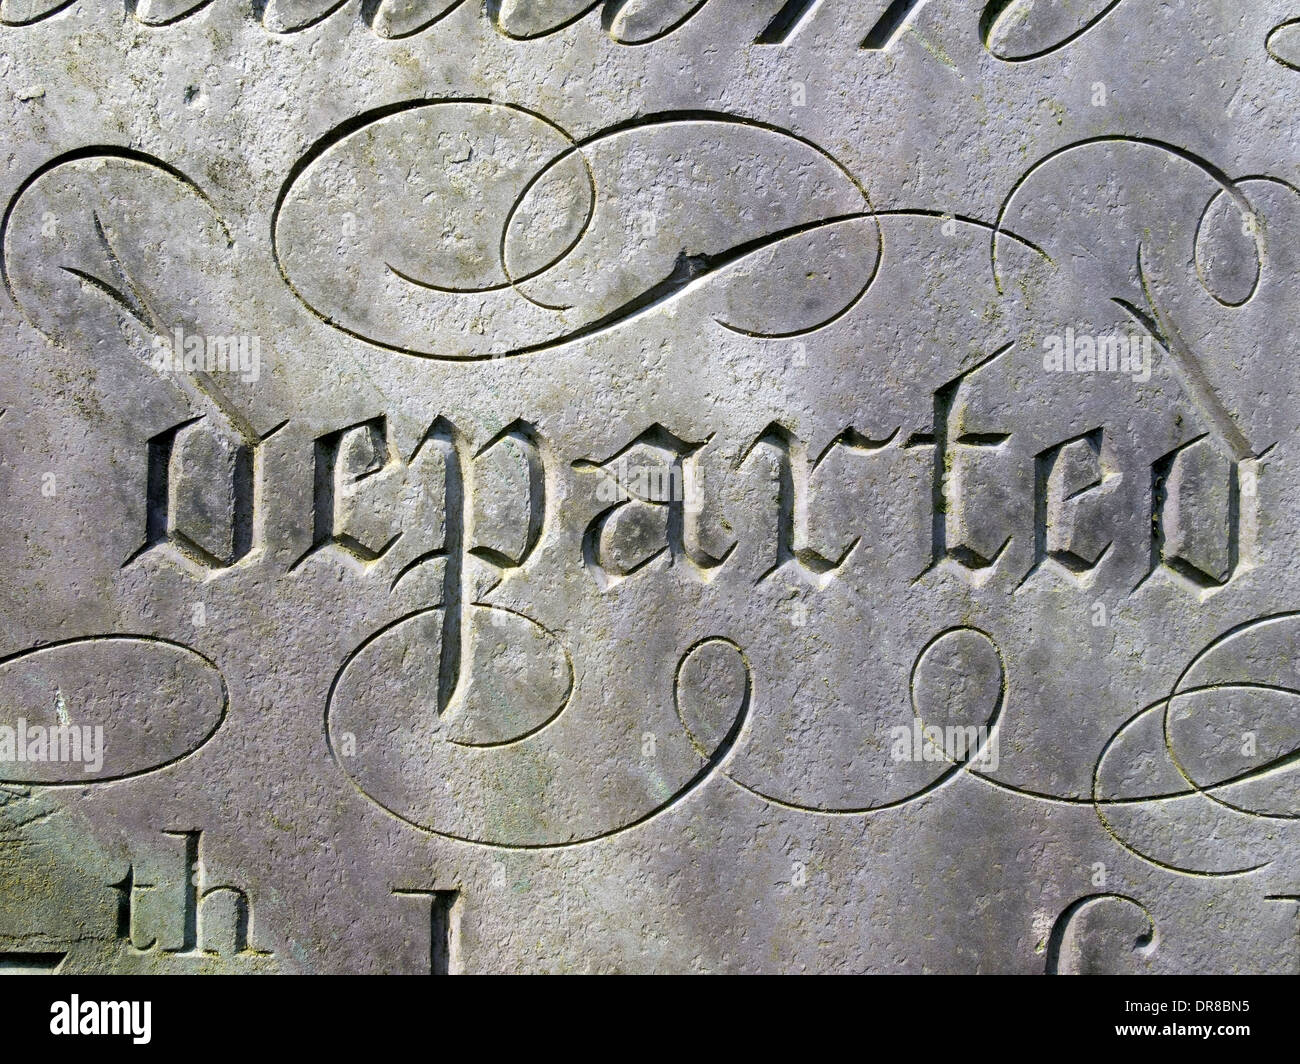 Close-up of ornate engraved cursive lettering on gravestone, St Mary's Churchyard, Melton Mowbray, Leicestershire, England, UK Stock Photo